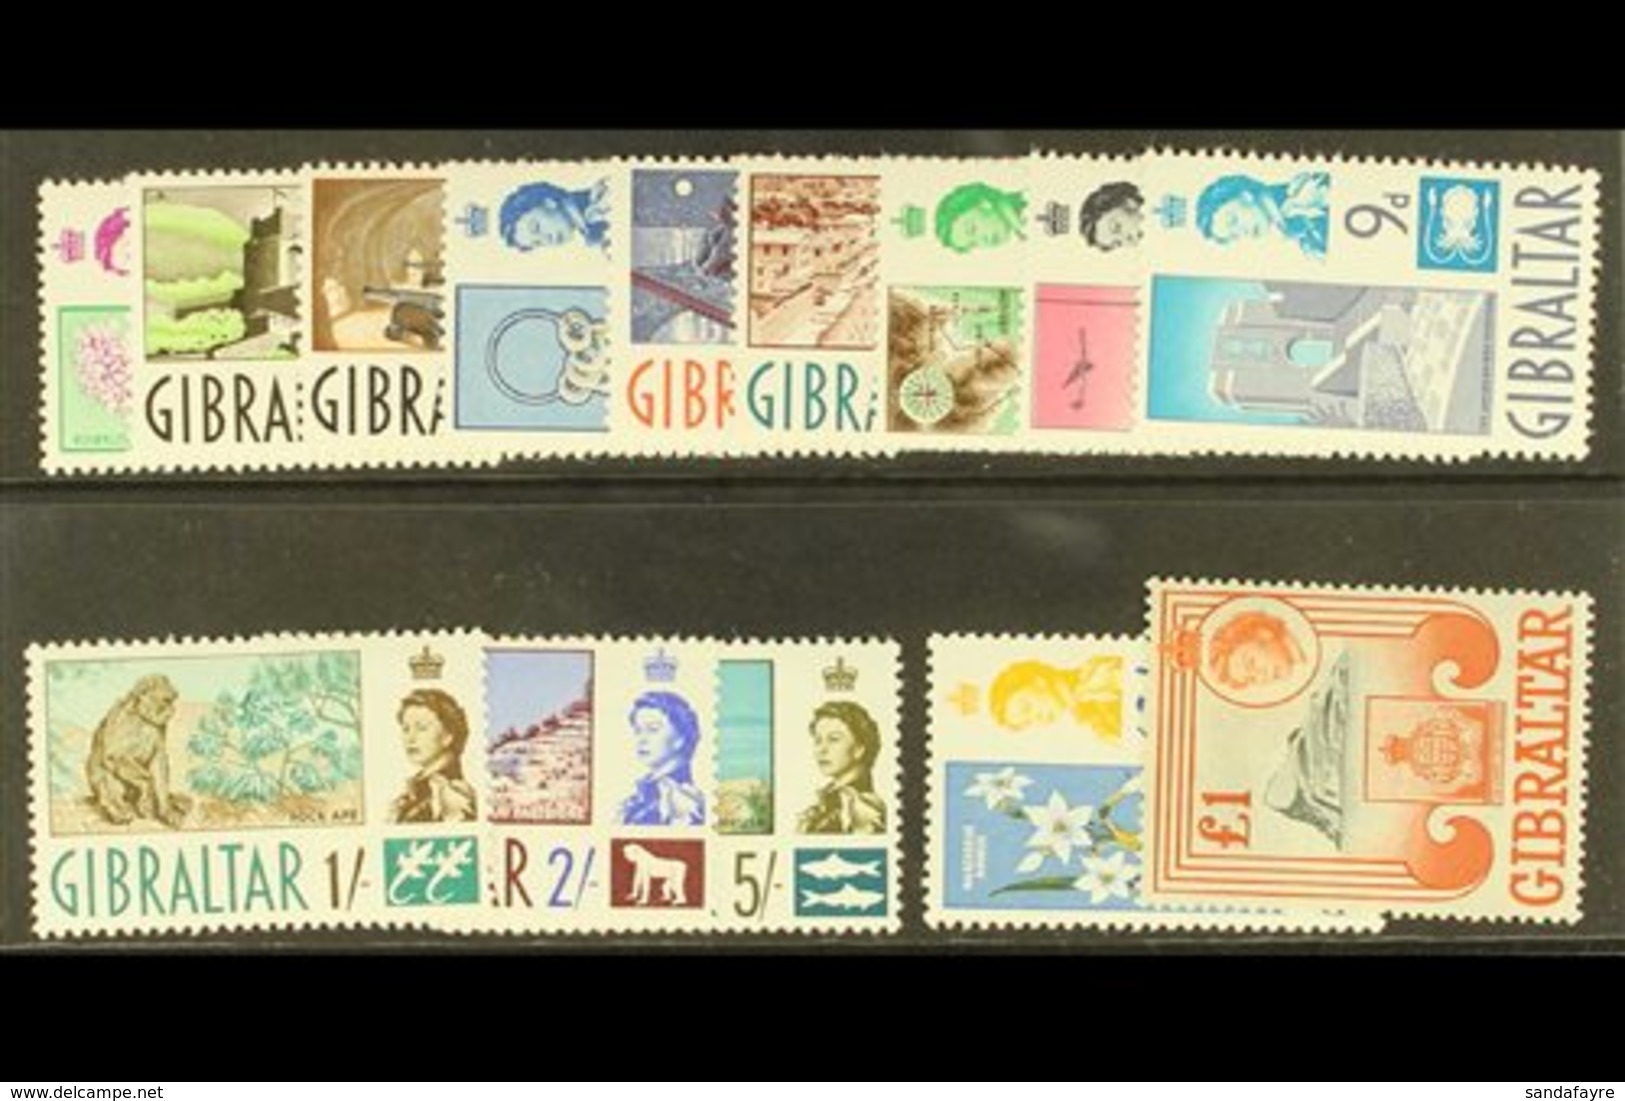 1960-62 Complete Definitive Set, SG 160/173, Never Hinged Mint. (14 Stamps) For More Images, Please Visit Http://www.san - Gibraltar